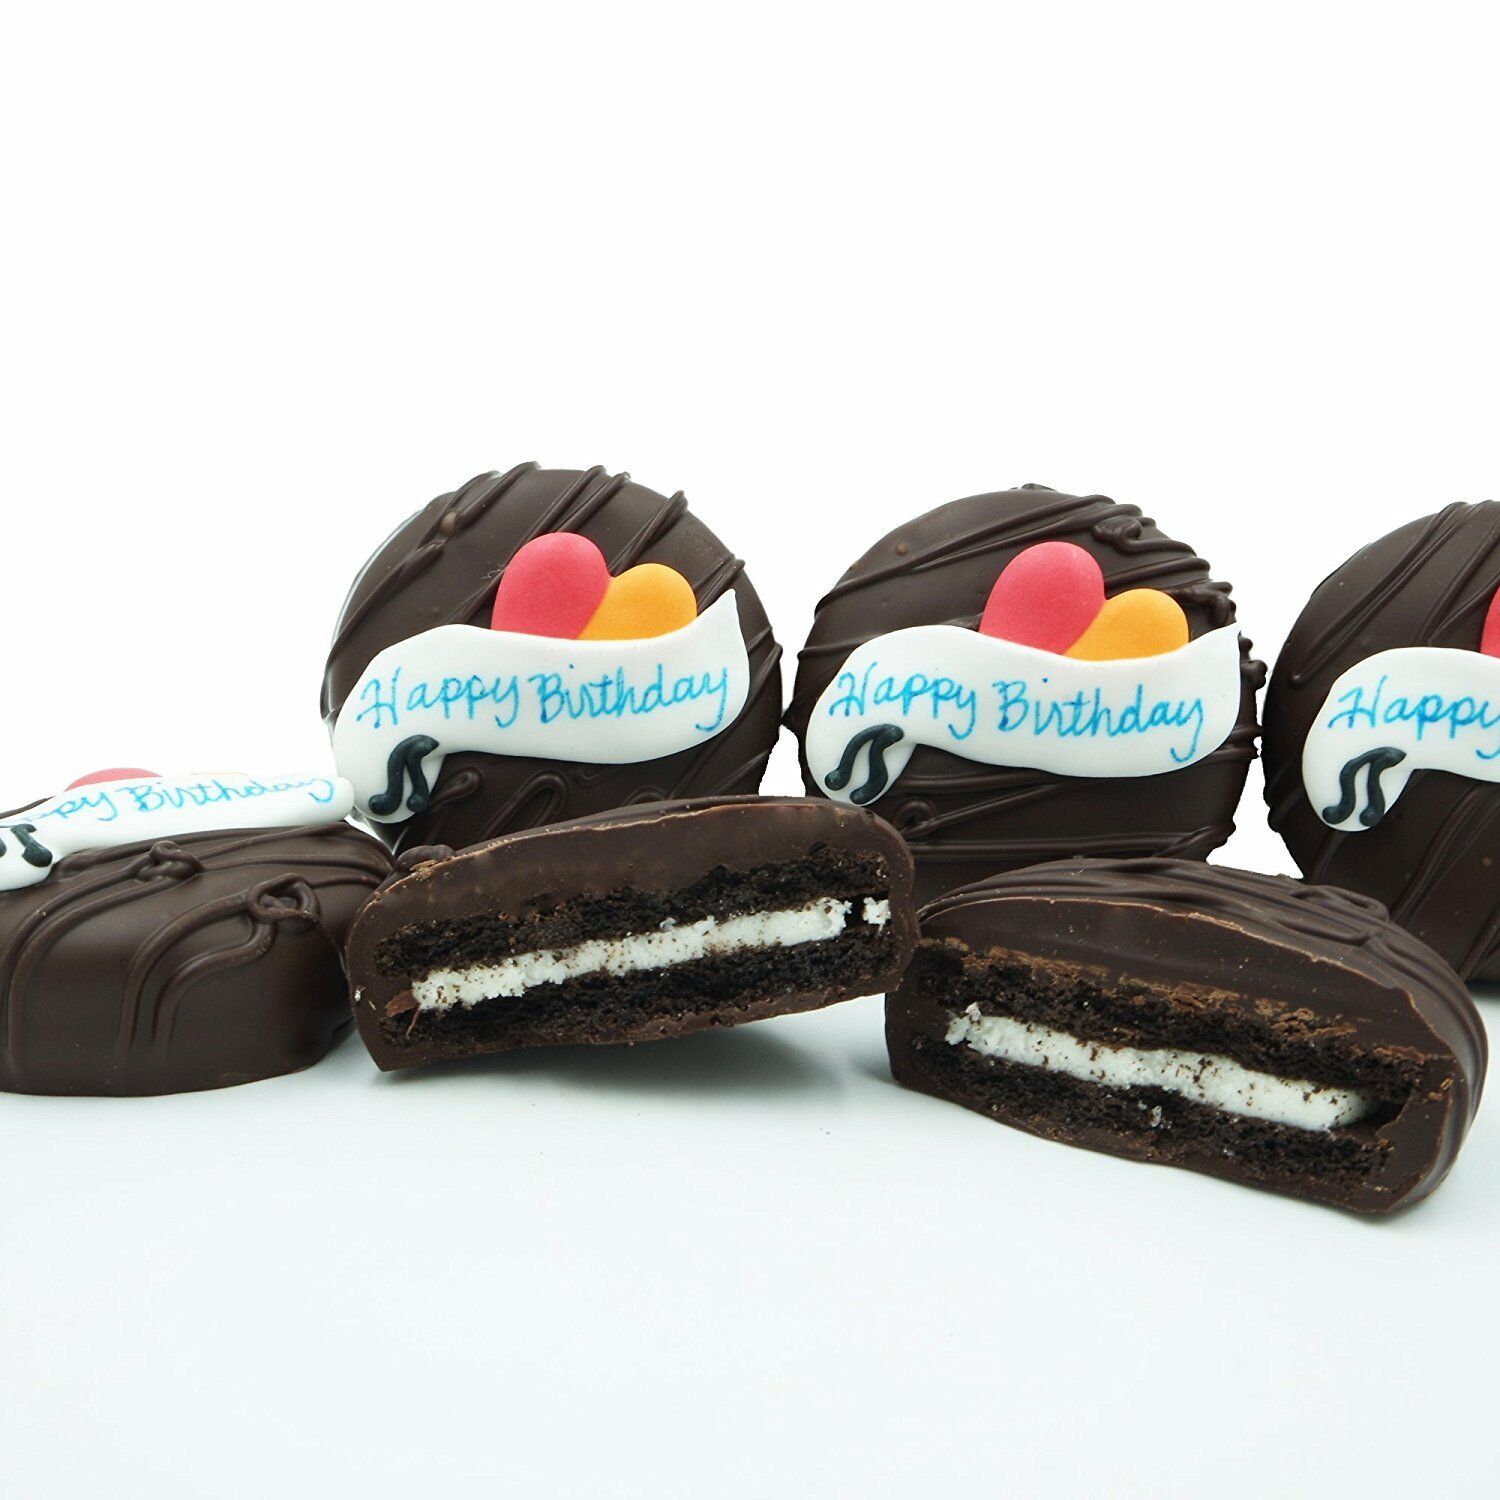 Philadelphia Candies Dark Chocolate Covered OREO® Cookies, Happy Birthday Gift